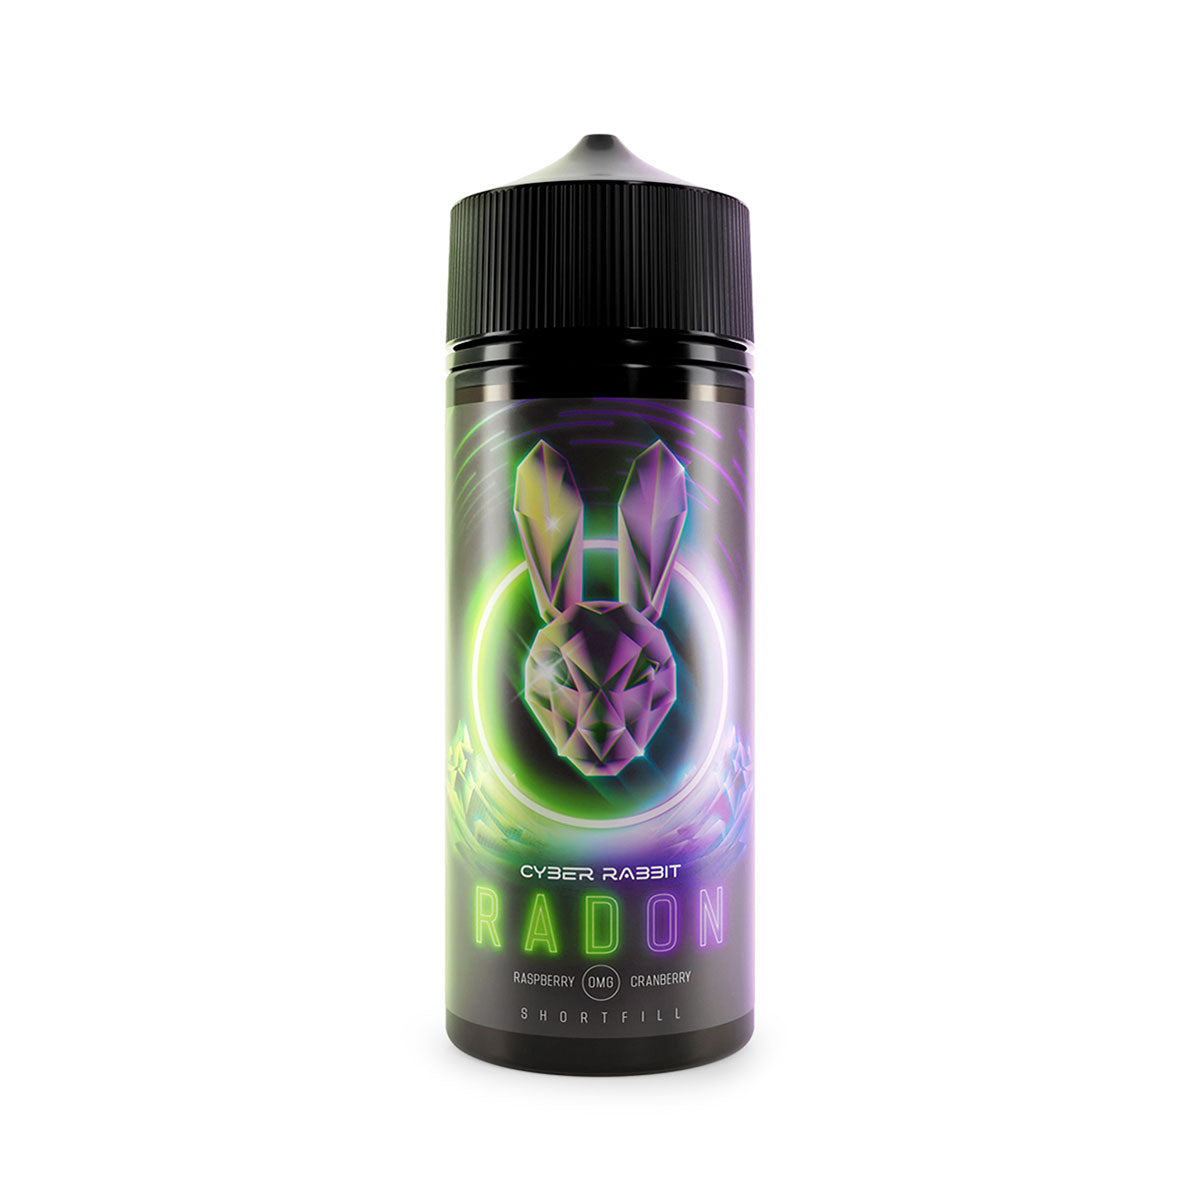 Radon Shortfill by Cyber Rabbit. - 100ml-Supergood.